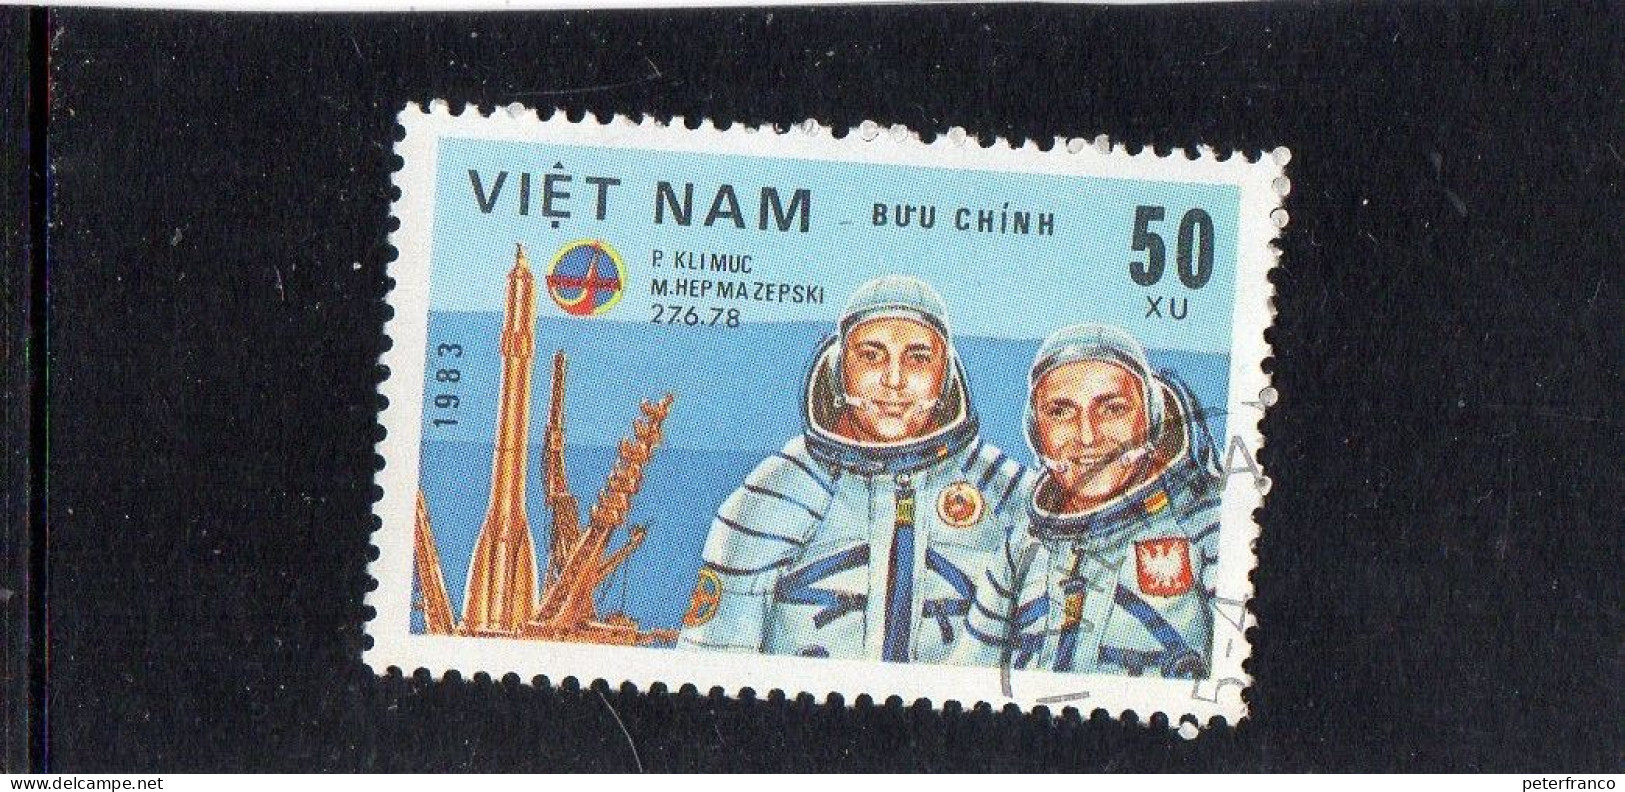 1983 Vietnam - Cosmonauti P. Klimuk E M.Hermaszewski - Asia